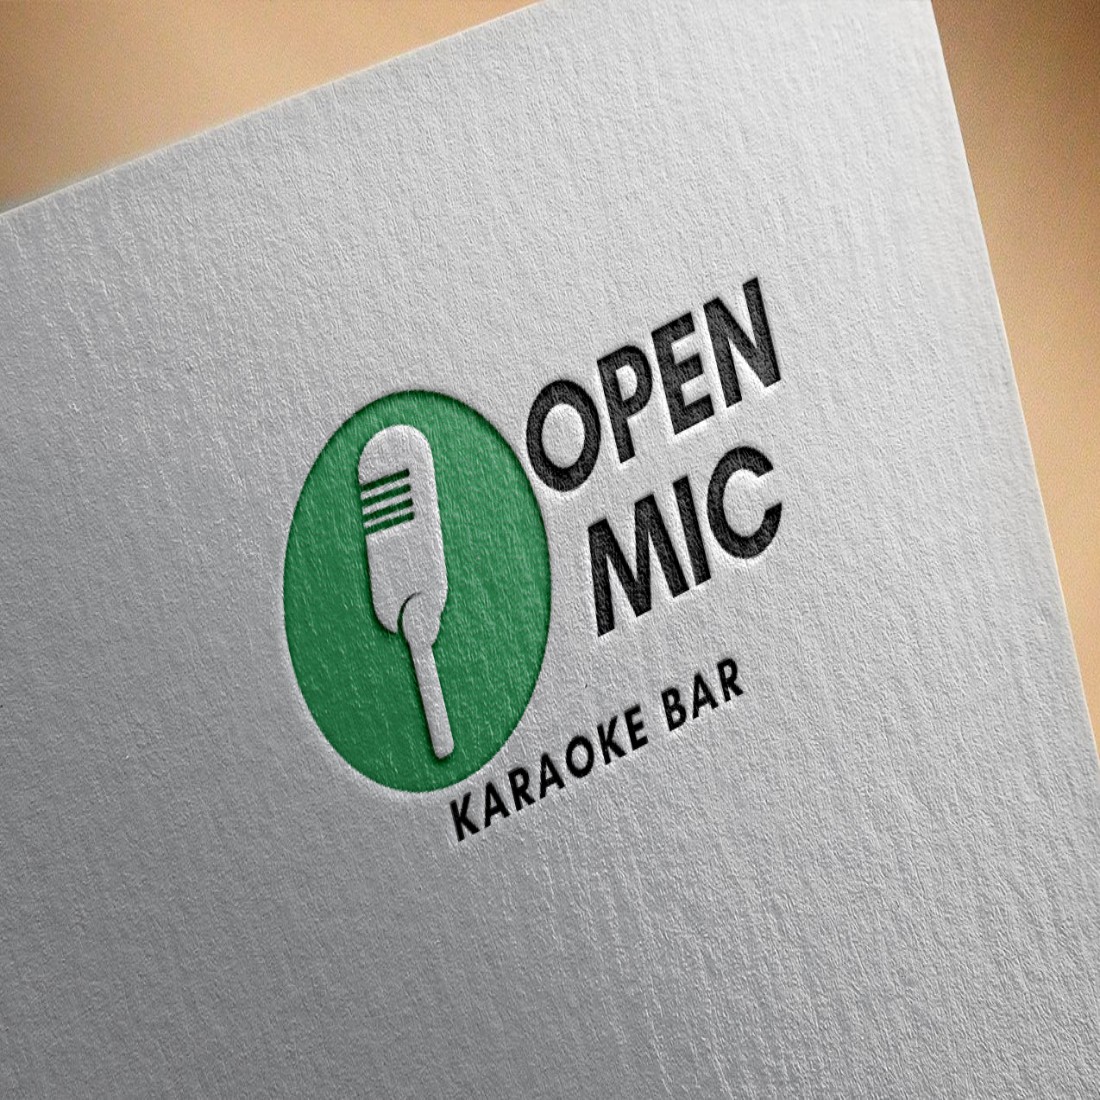 Karaoke Bar OPEN MIC Logo Design cover image.